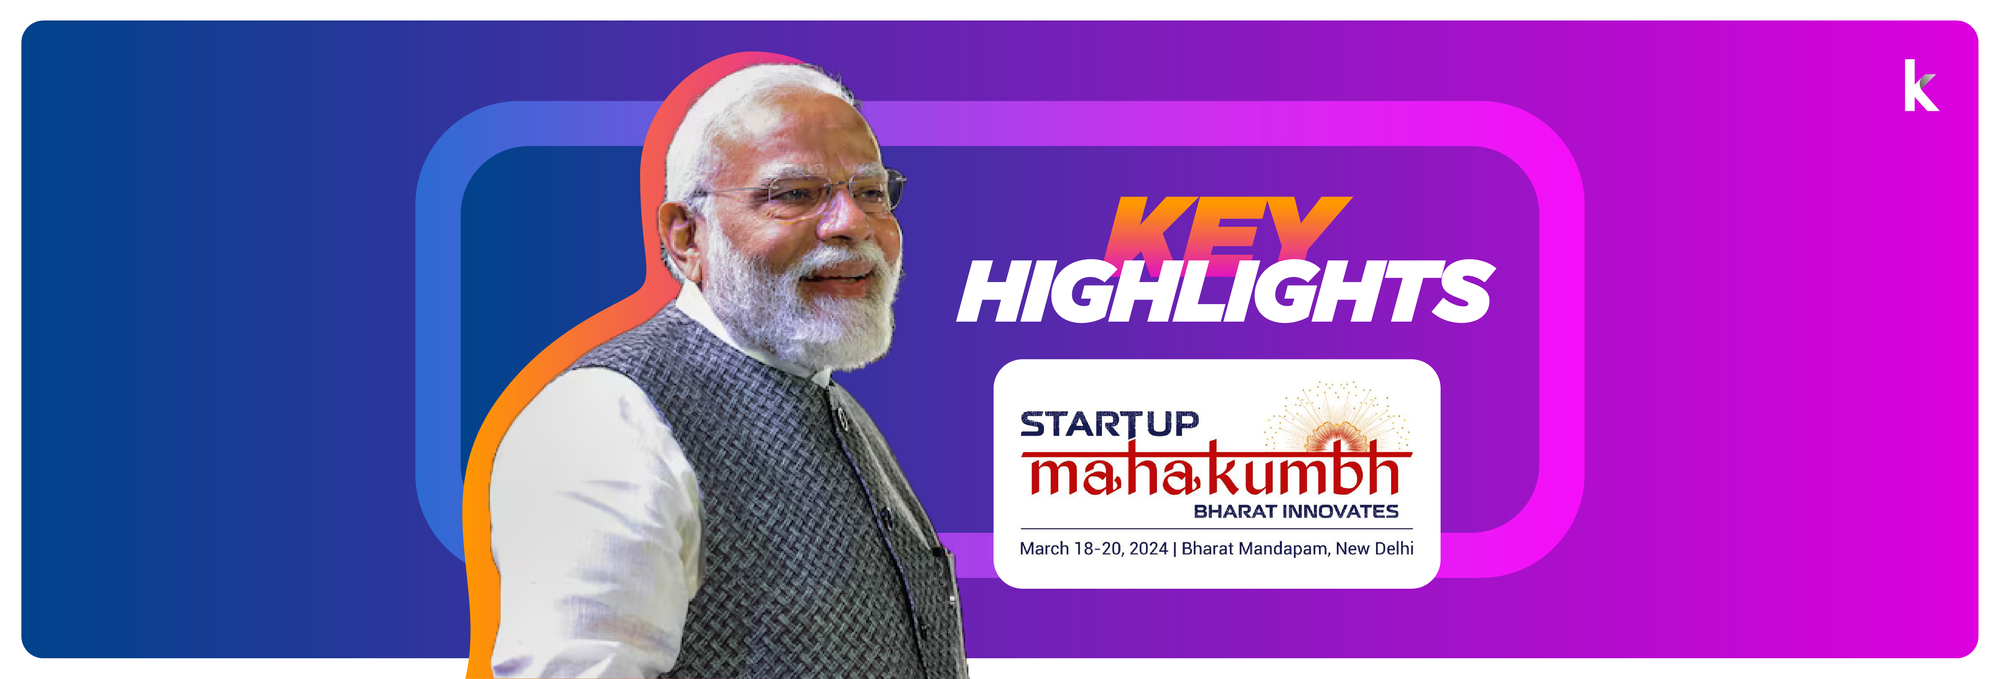 [Startup Mahakumbh] 5 takeaways from India's largest start ups event